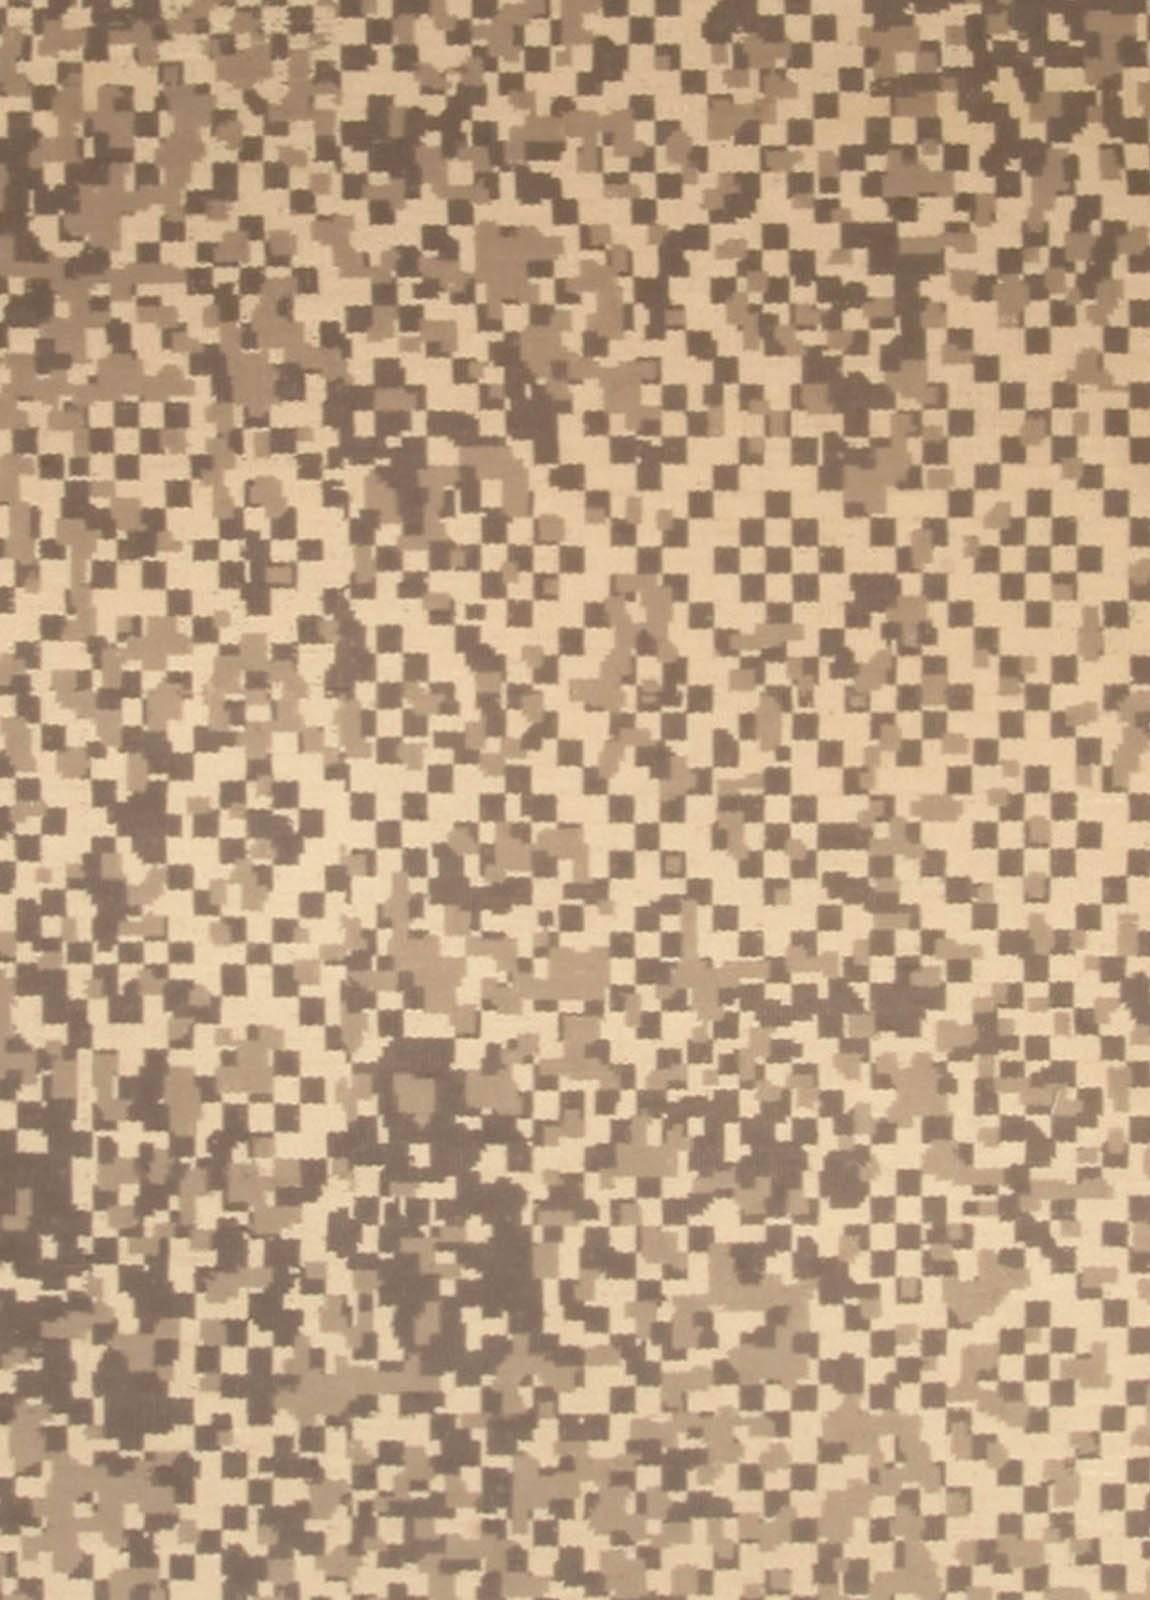 Contemporary Petra design beige and brown handmade wool rug by Doris Leslie Blau
Size: 12'0